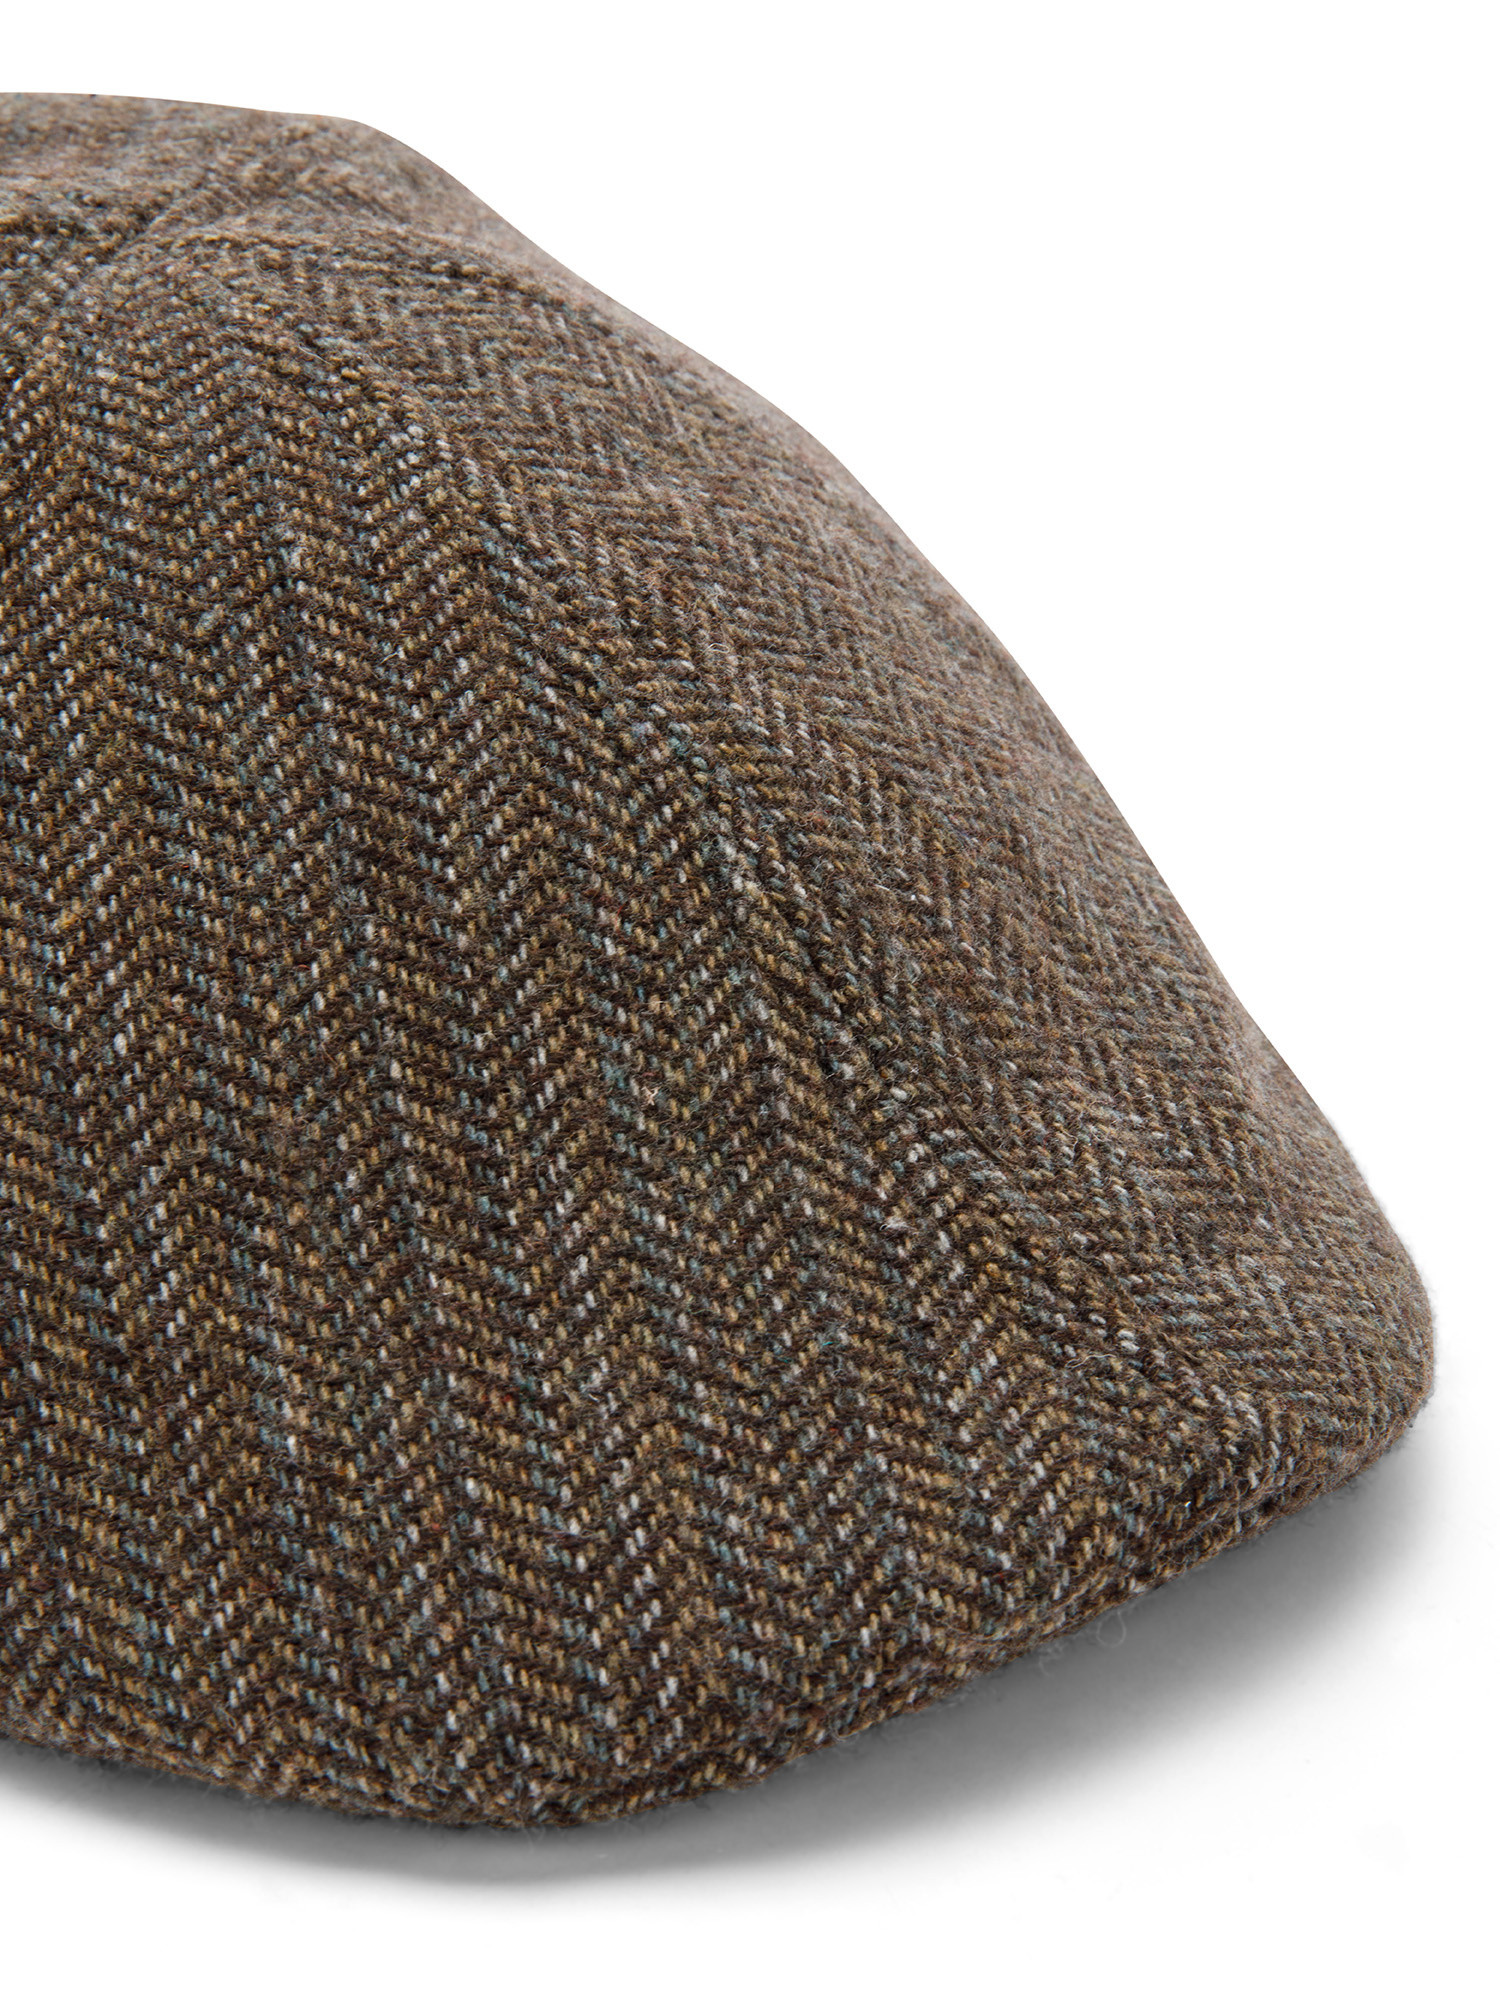 Luca D'Altieri - Flat cap in herringbone fabric, Brown, large image number 1